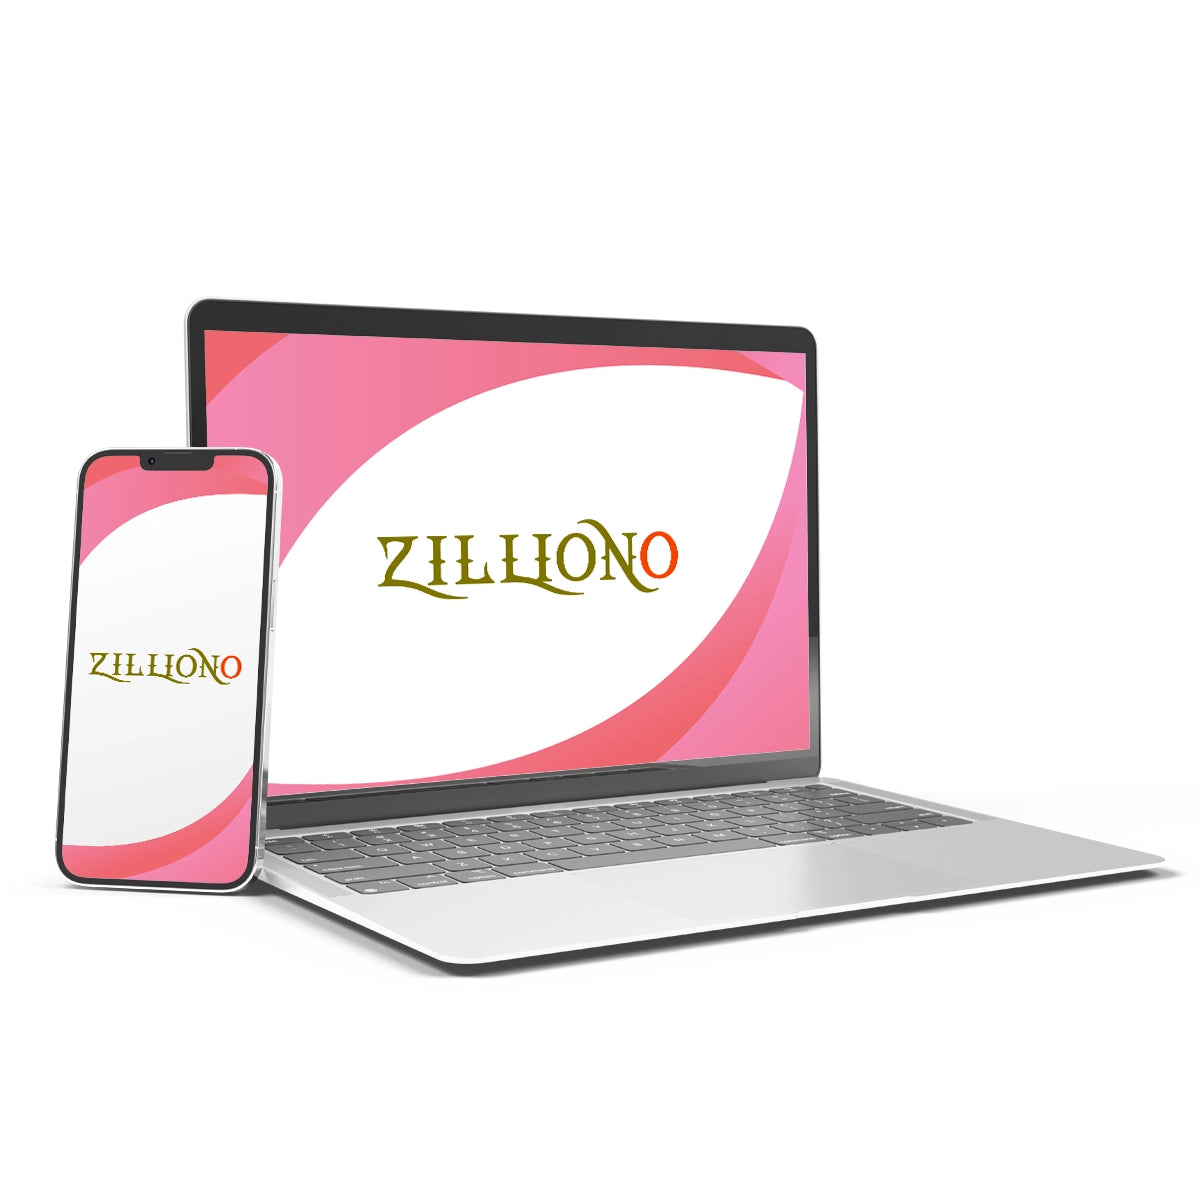 zilliono.com